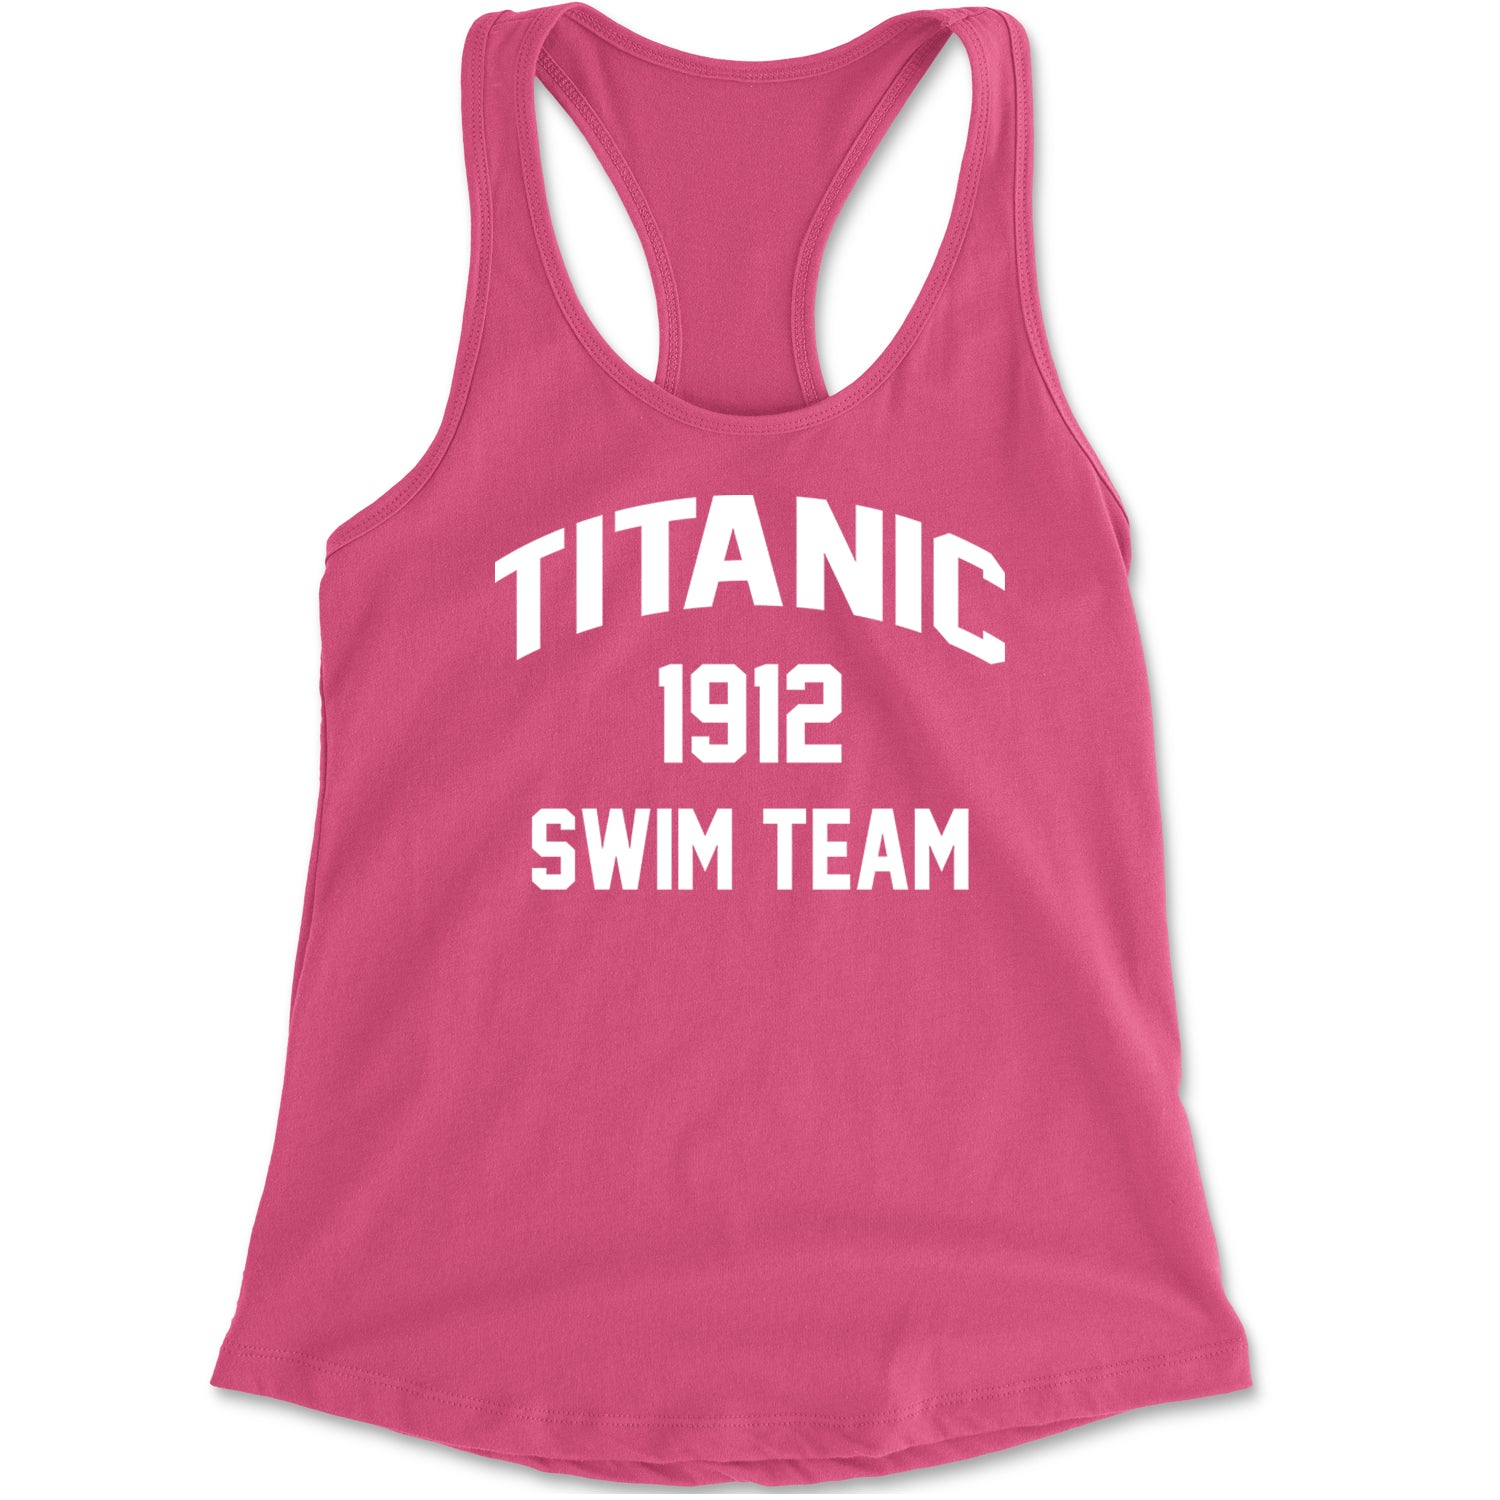 Titanic Swim Team 1912 Funny Cruise Racerback Tank Top for Women Hot Pink